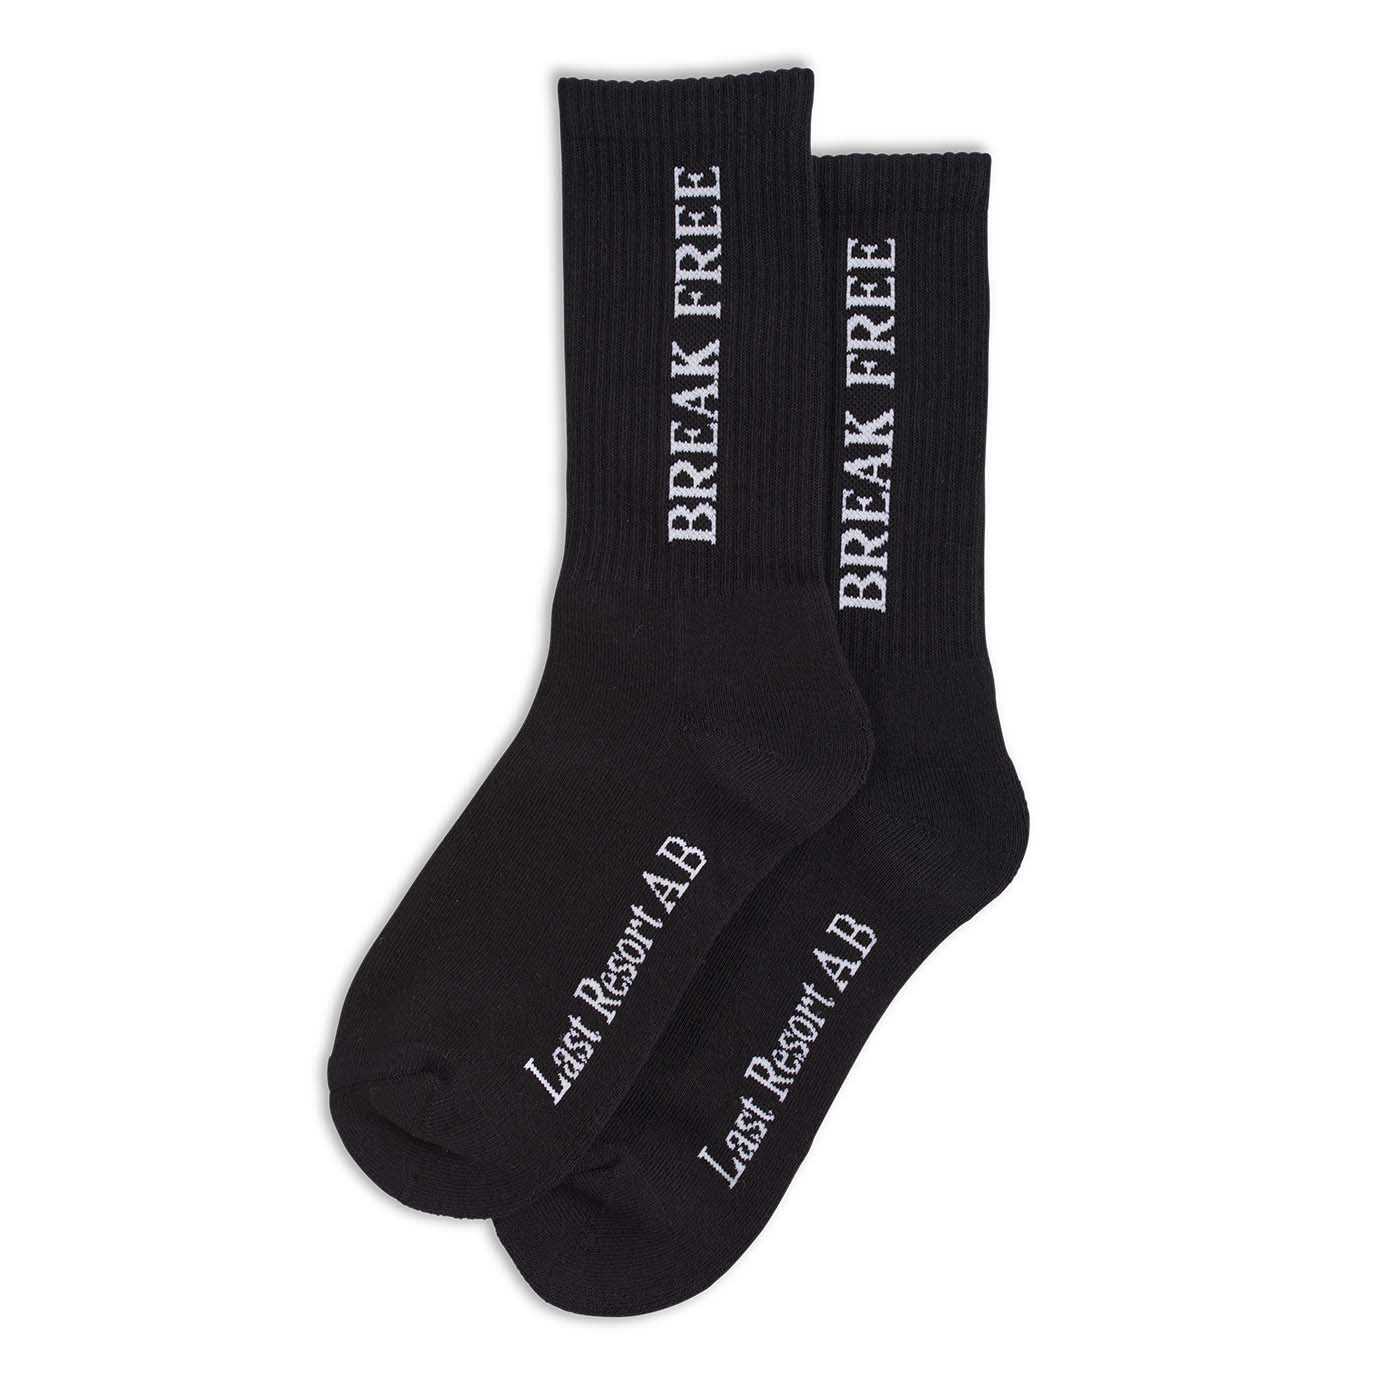 Break Free Socks 3-Pack (Black)